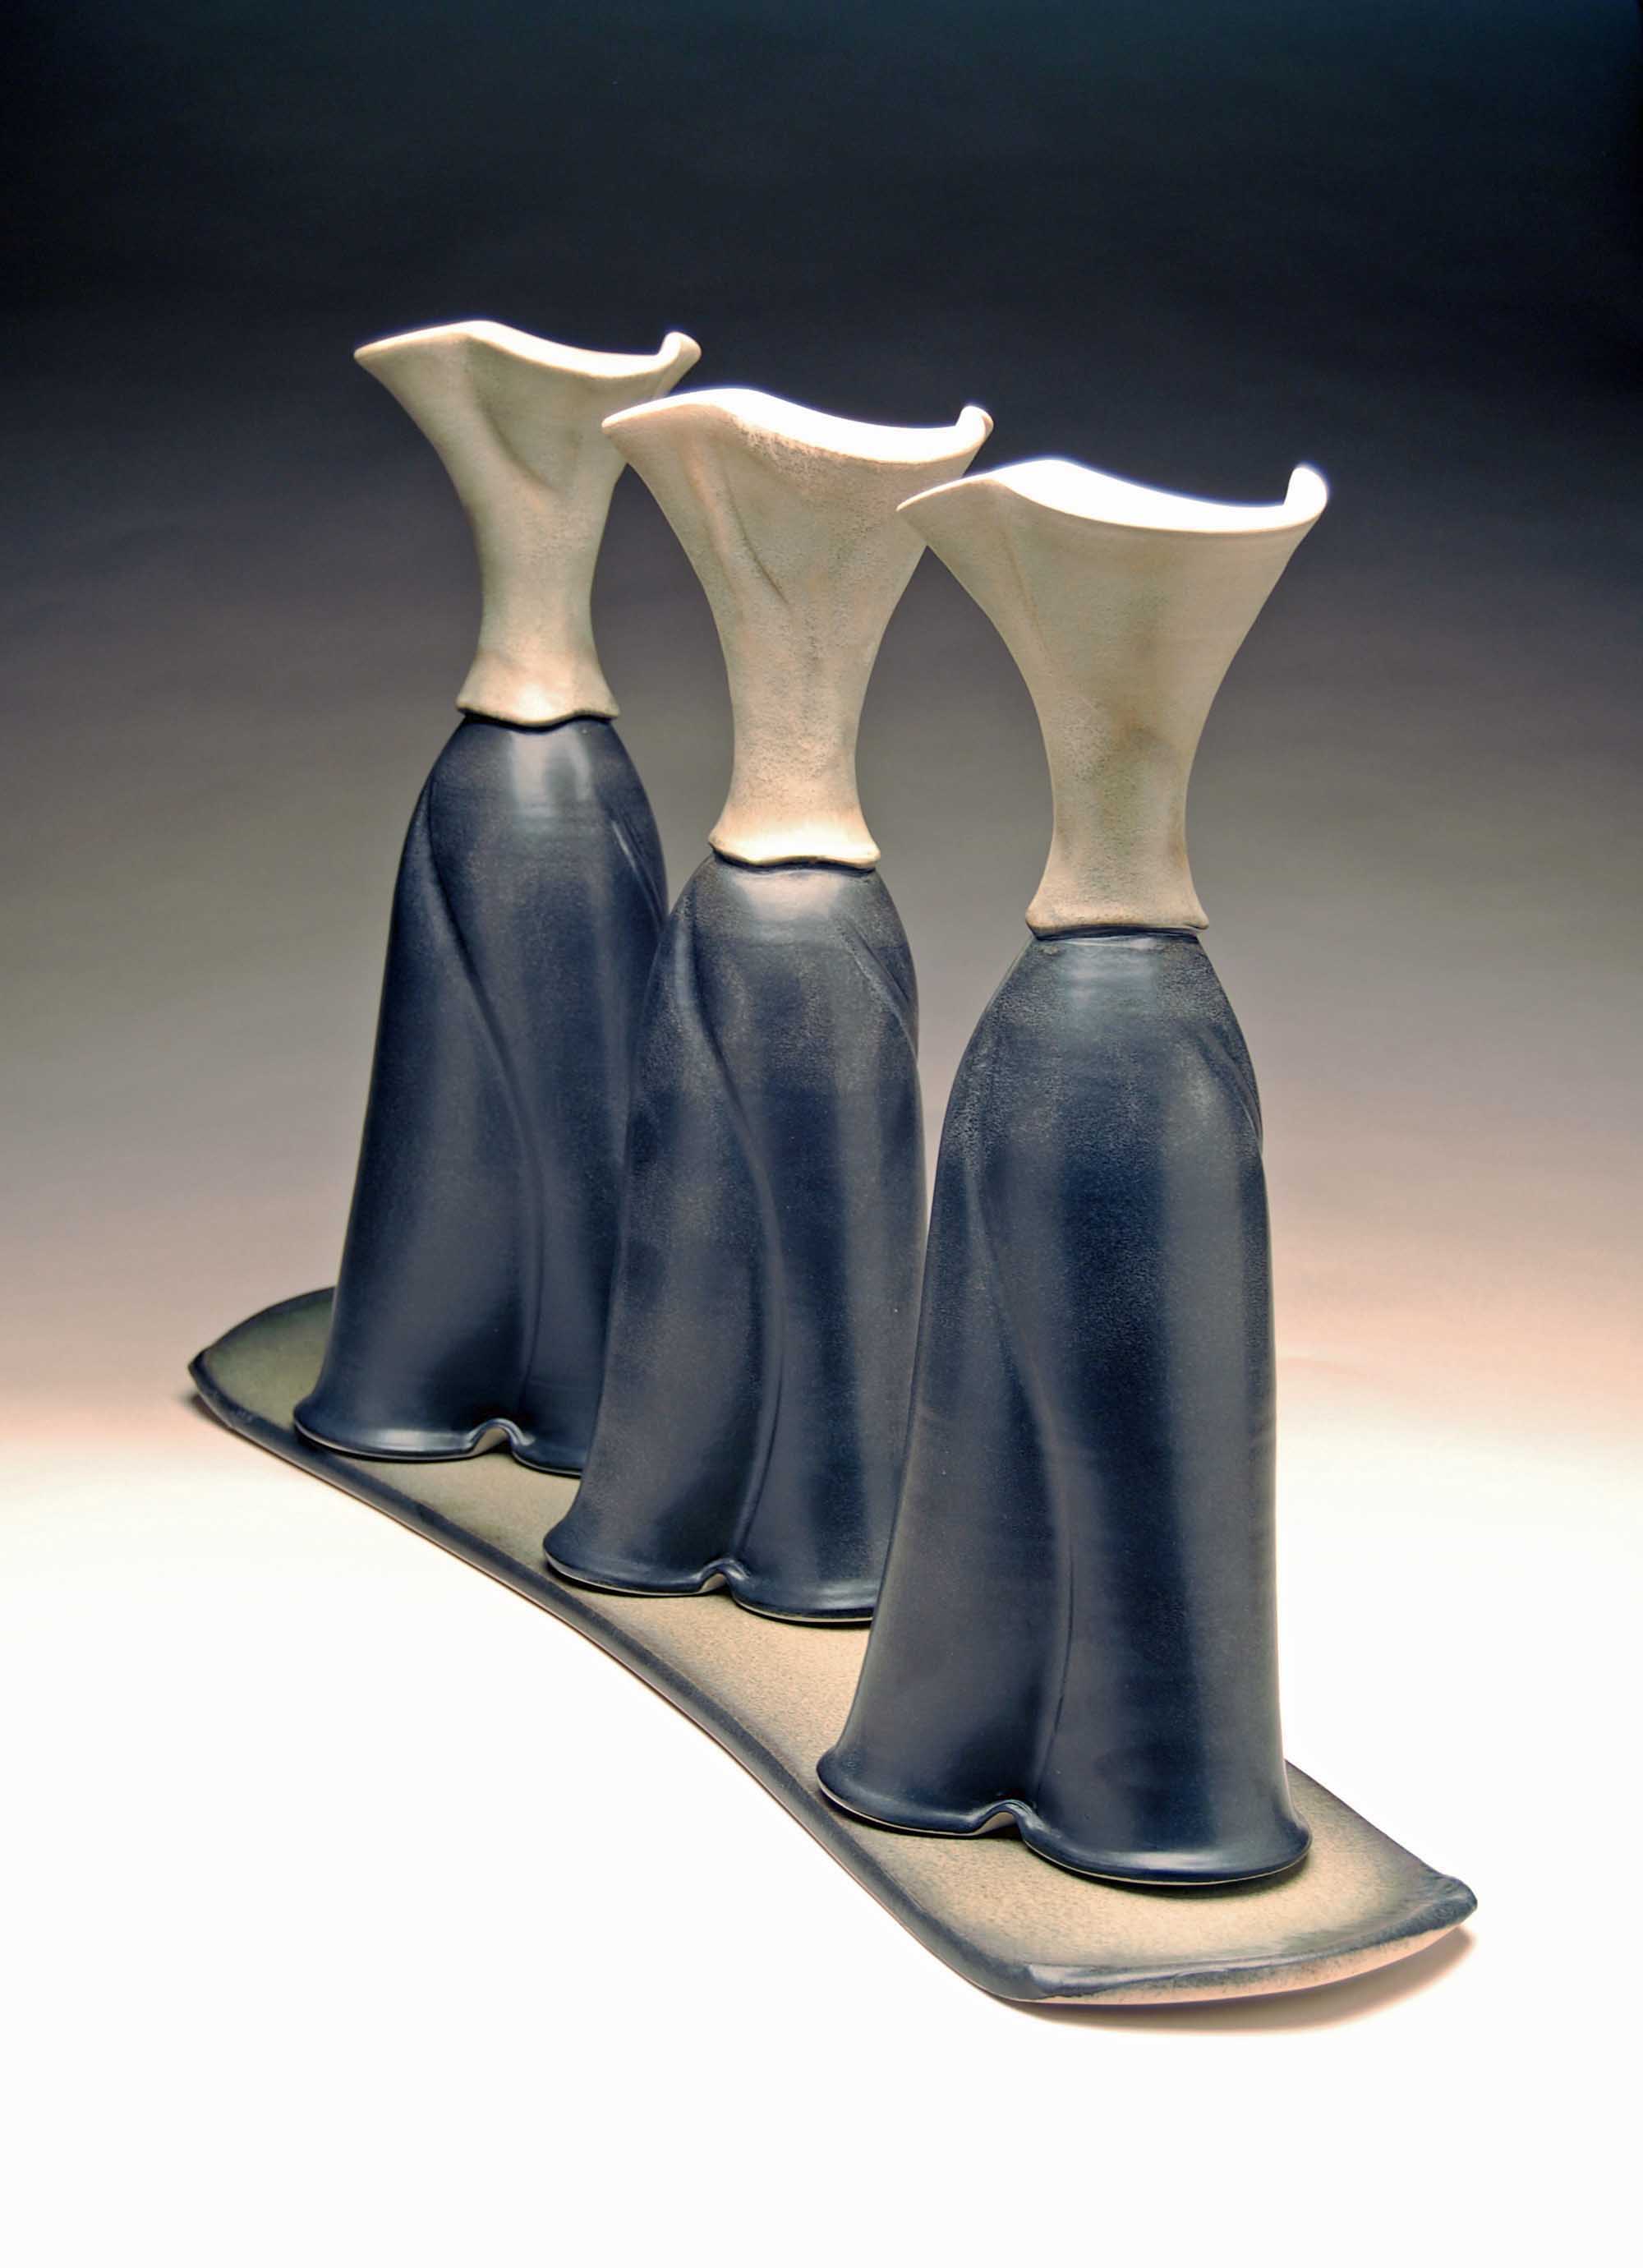 conner burns - three sisters vase set